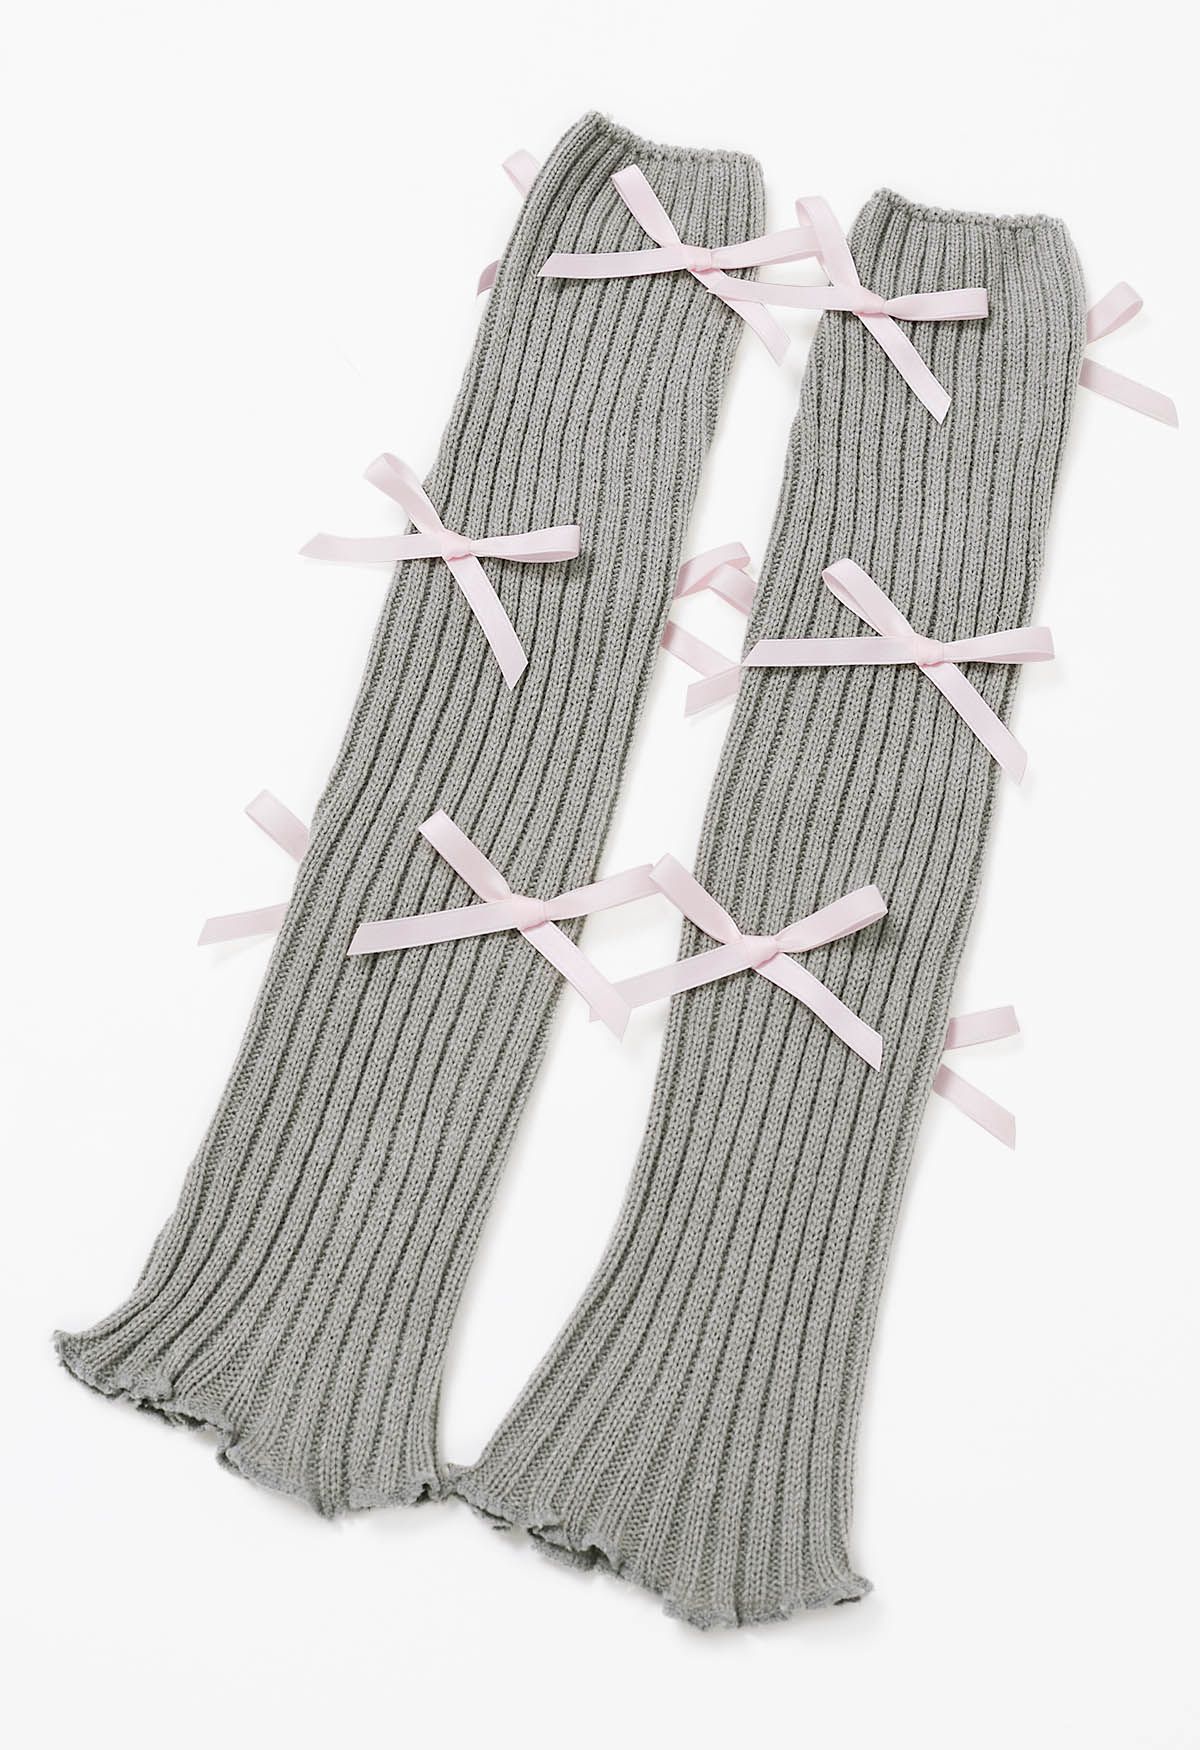 Bowknot Decor Knit Leg Warmers in Grey